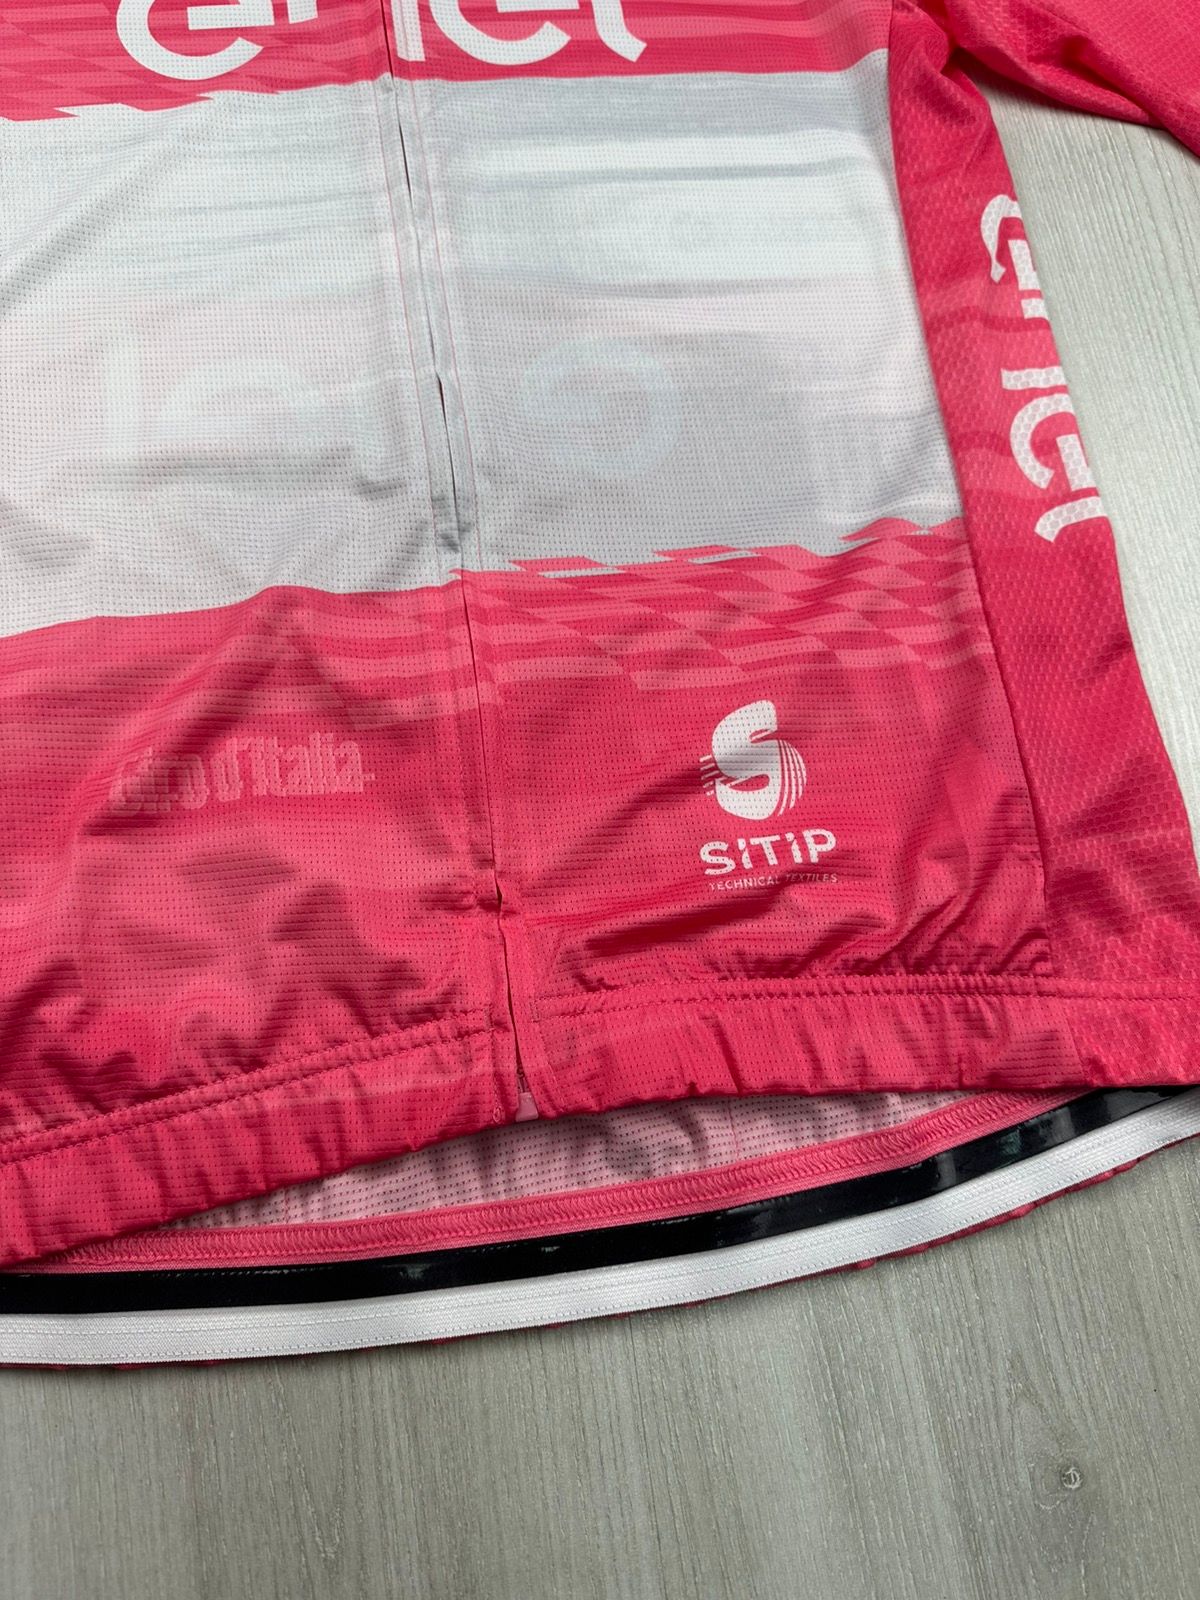 Cycle Castelli x Giro D italia Cycling Shirt Jersey Size US XL / EU 56 / 4 - 4 Thumbnail